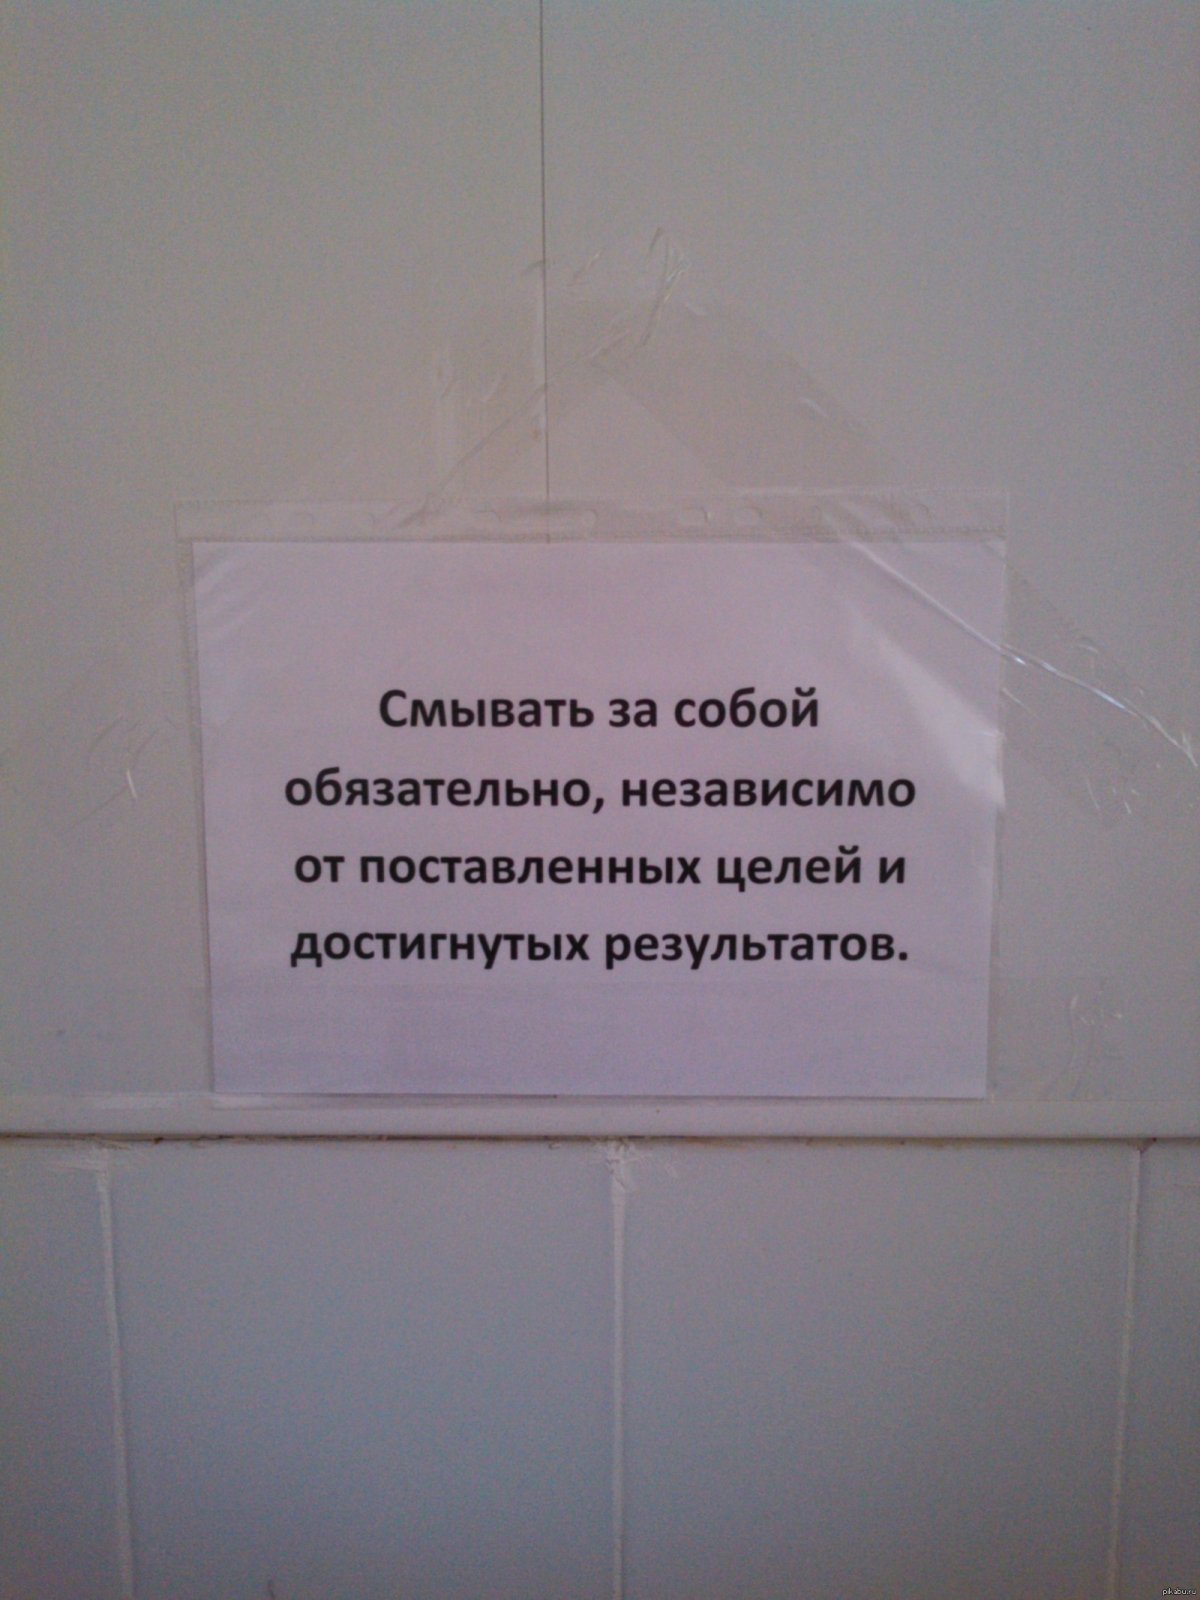 Объявление в туалете для сотрудников